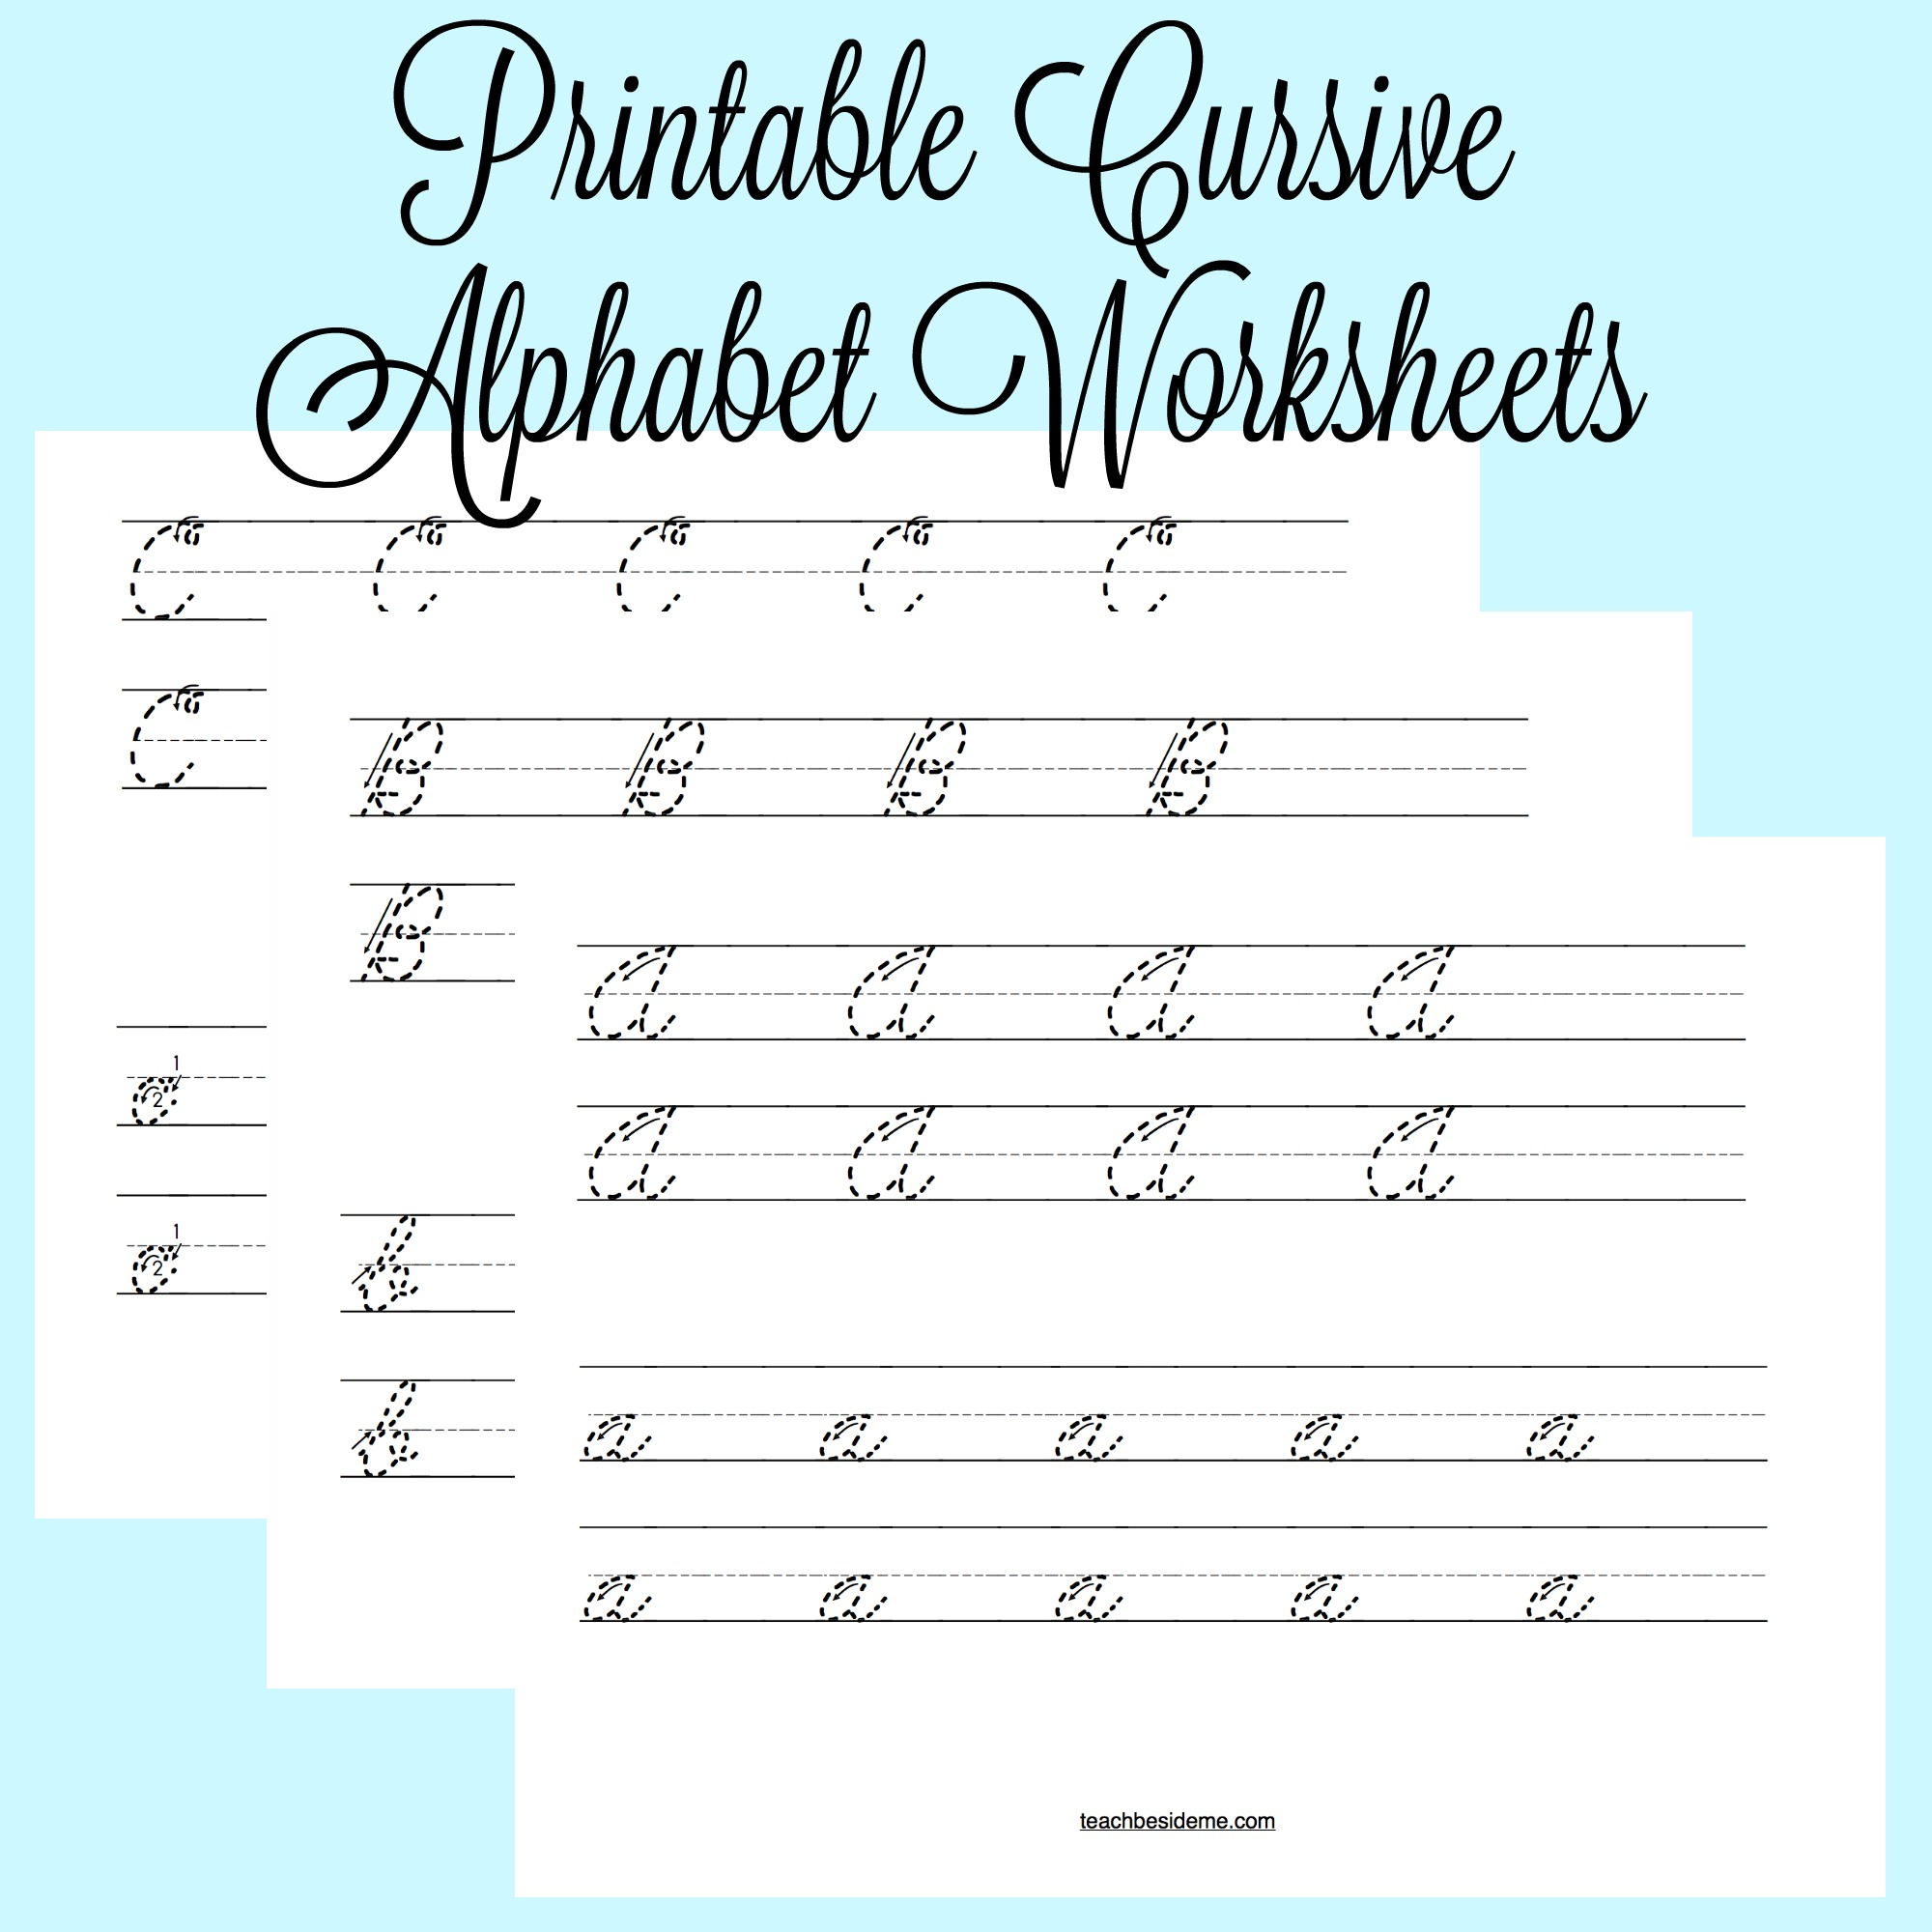 Printable Cursive Alphabet Worksheets – Teach Beside Me | Printable Cursive Worksheets